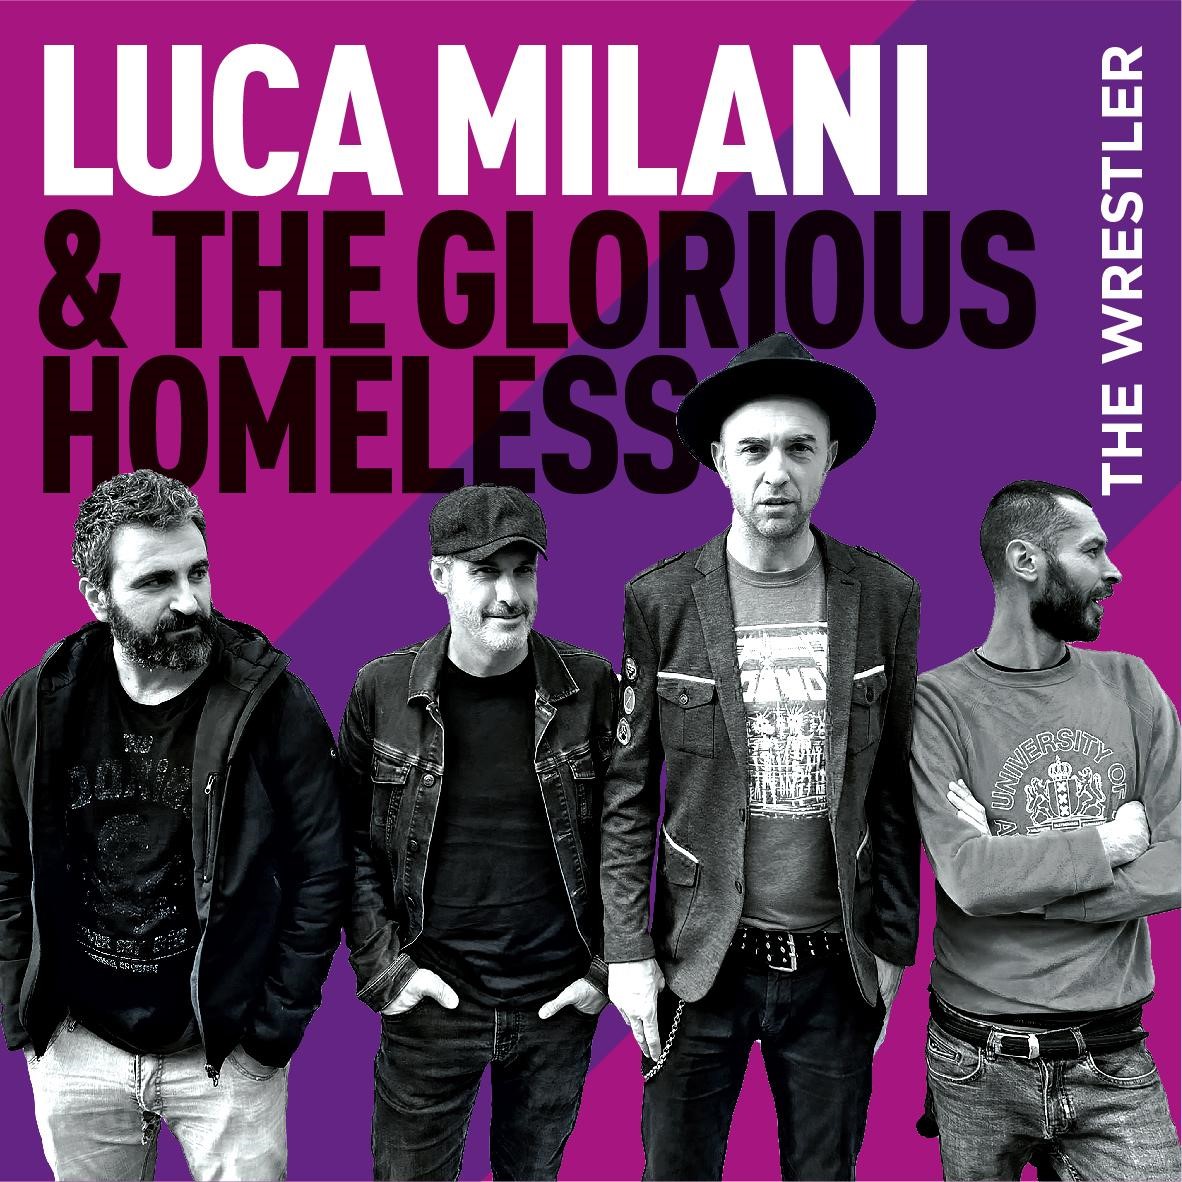 LUCA MILANI & THE GLORIOUS HOMELESS